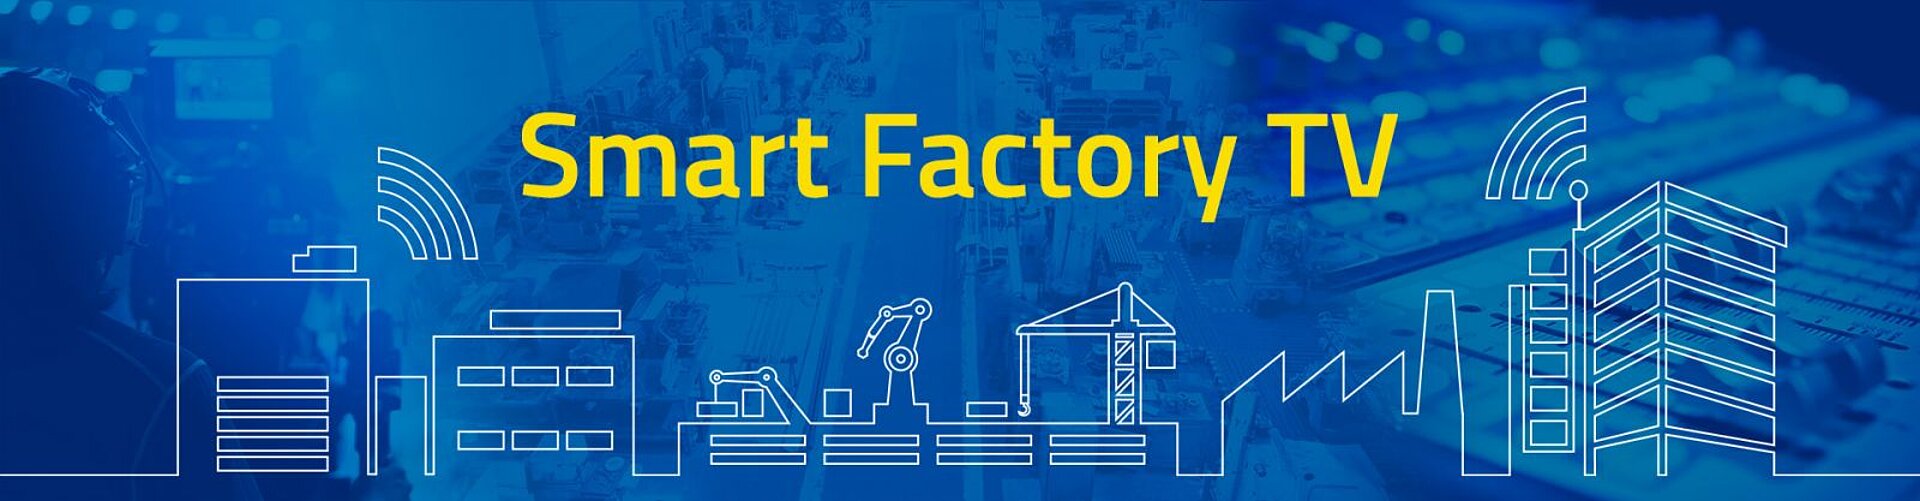 Smart Factory TV